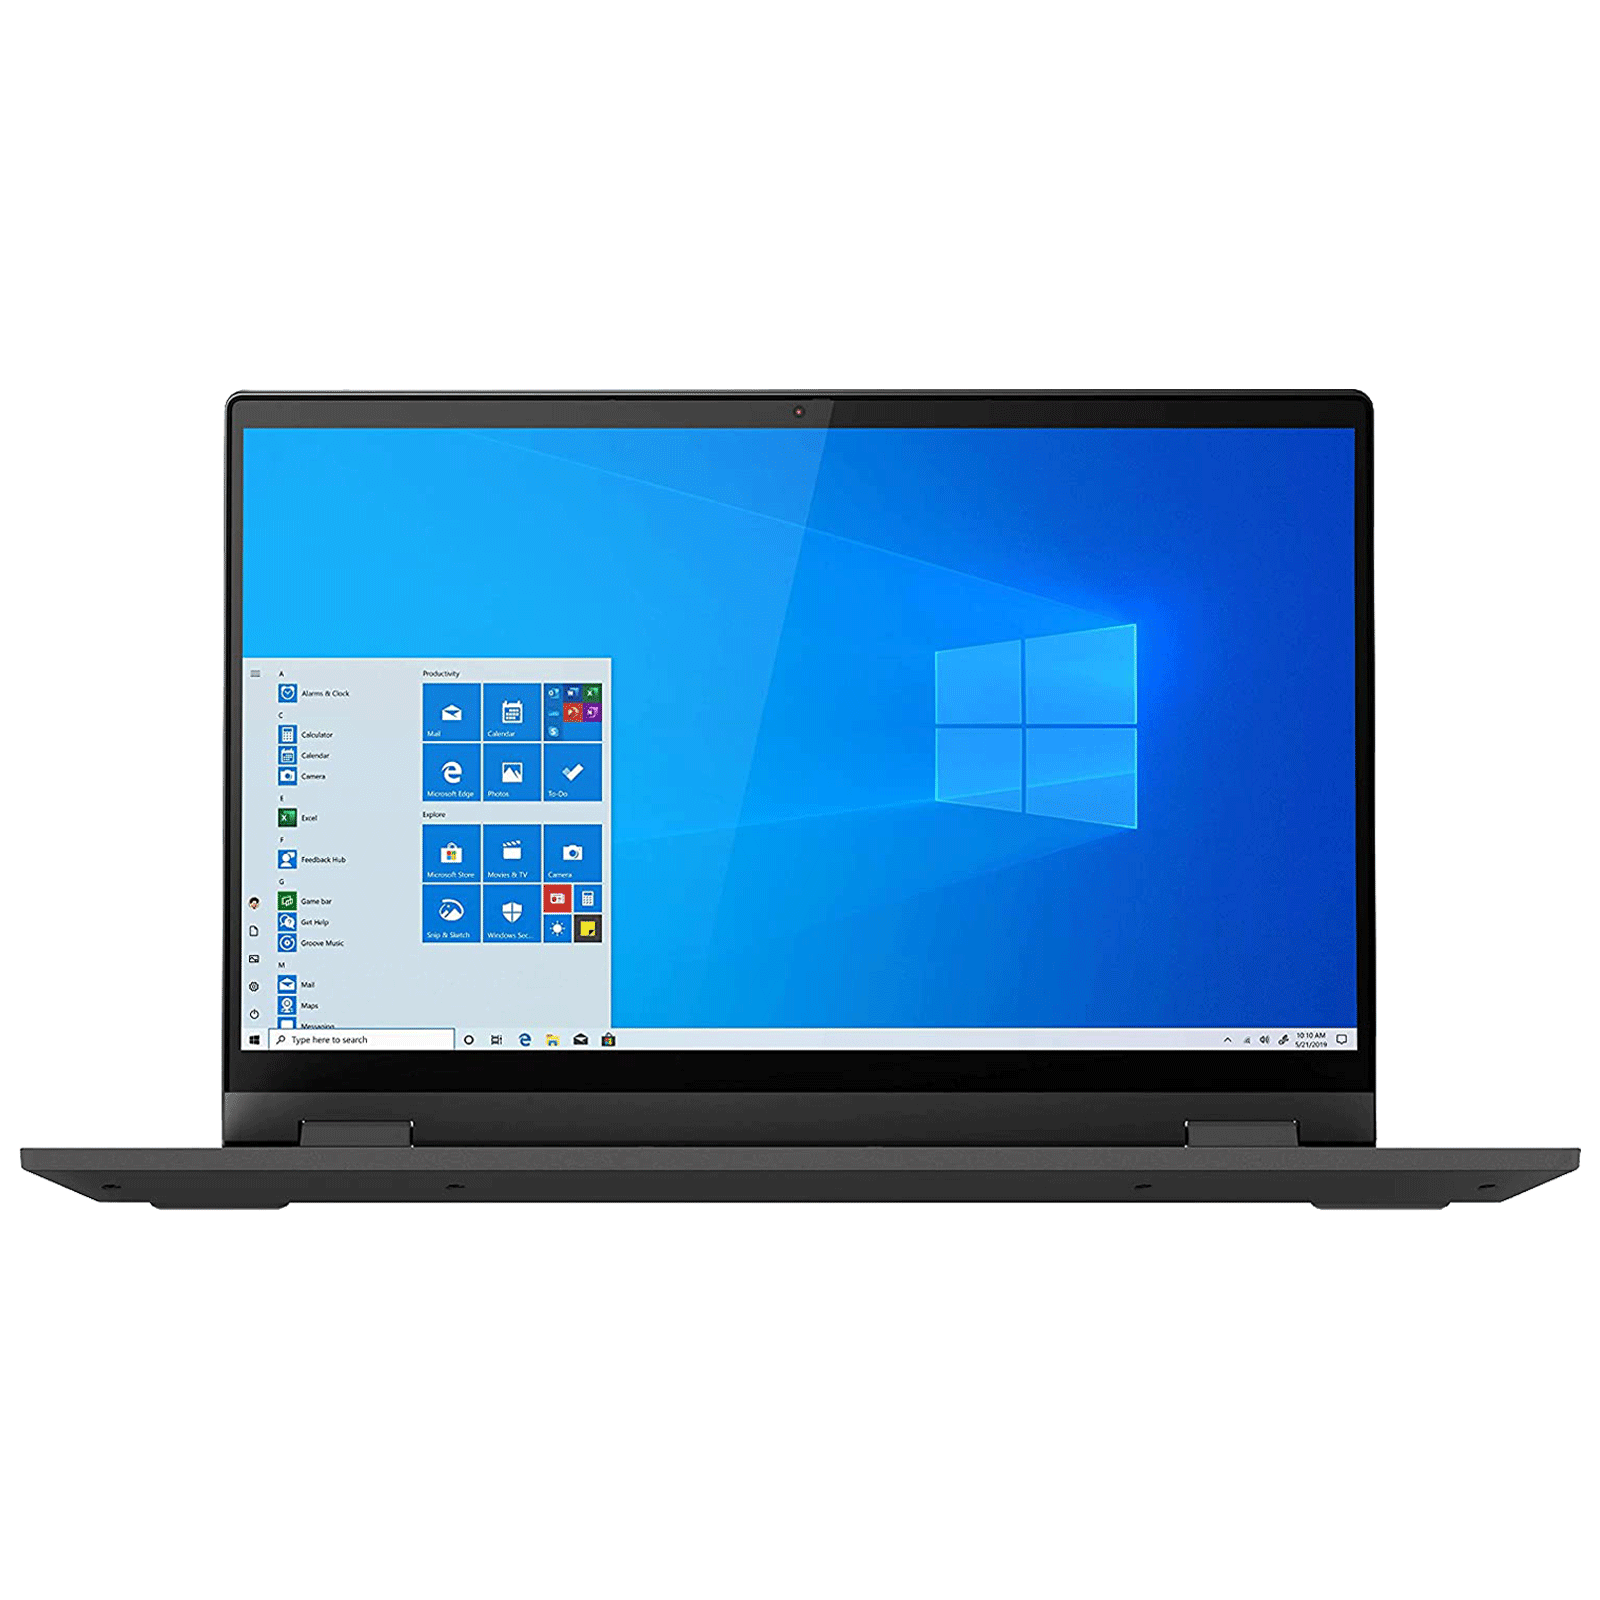 lenovo - lenovo Ideapad Flex 5 11th Gen Core i5 Windows 10 Home 2-in-1 Laptop (8GB RAM, 512GB SSD, Intel Iris Xe Graphics, MS Office, 35.56cm, 82HS015CIN, Graphite Grey)